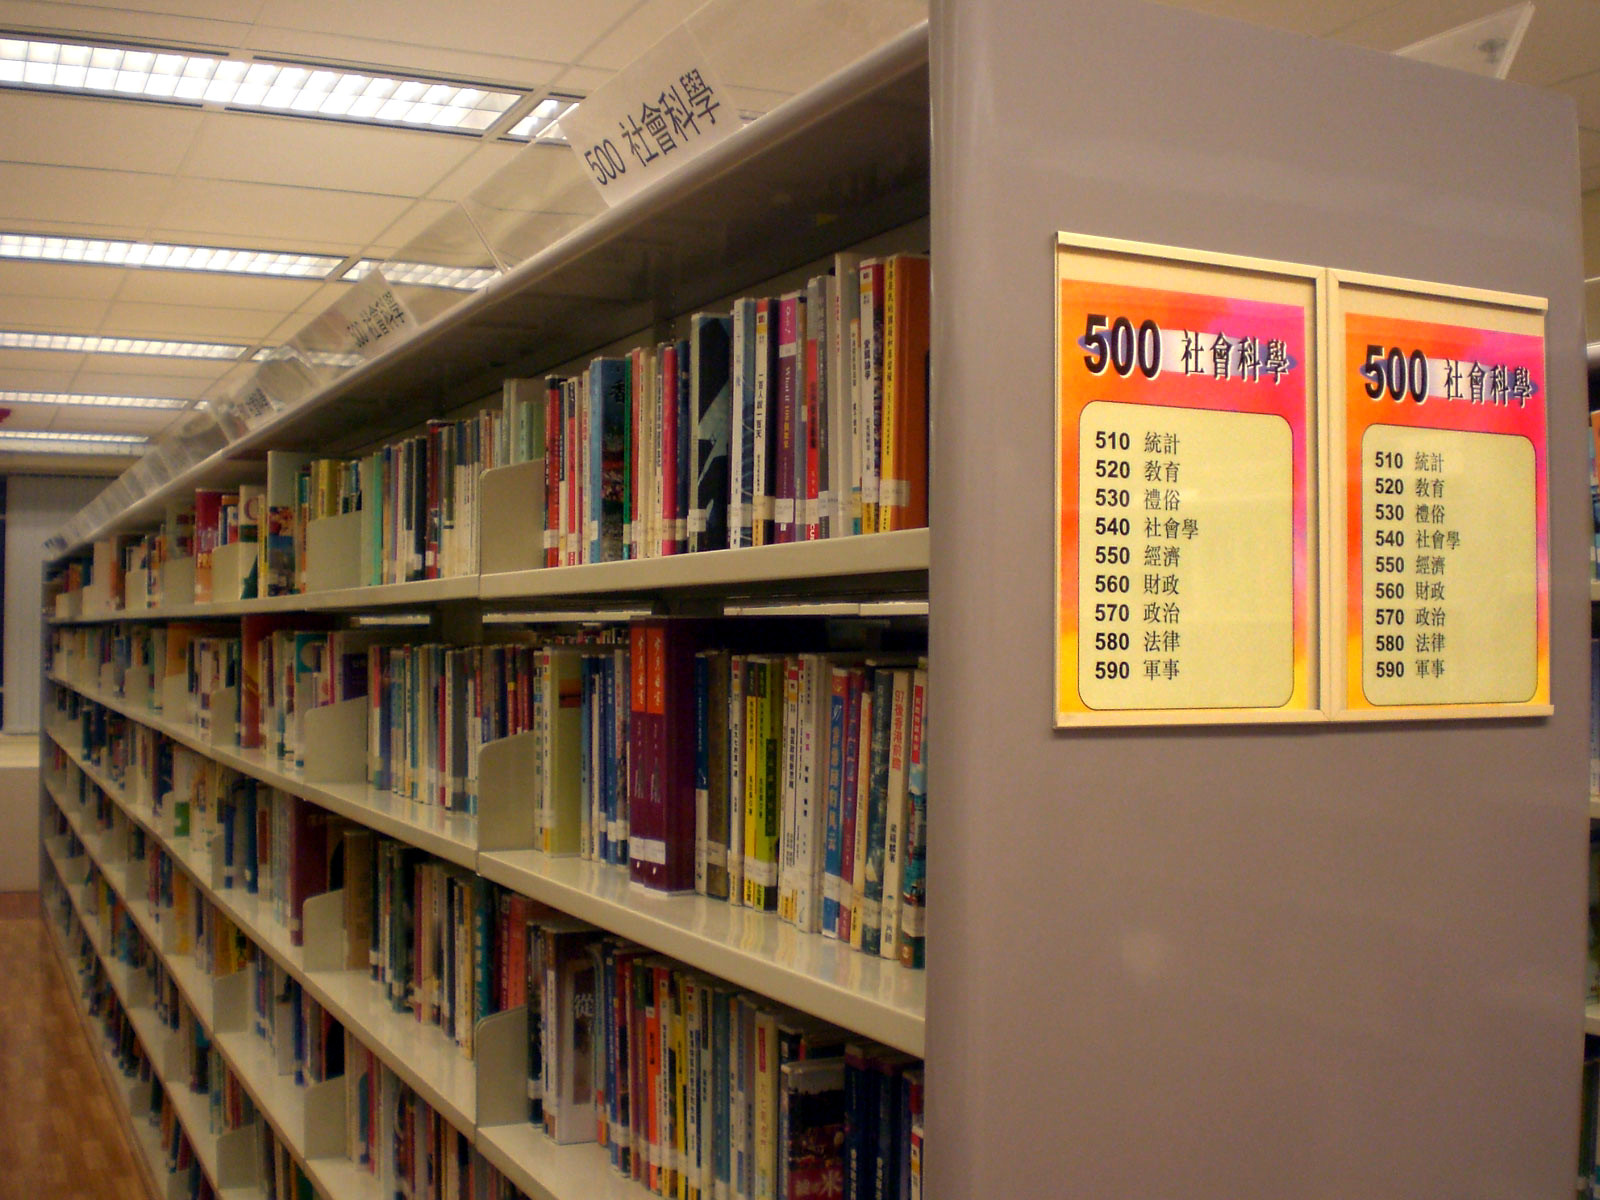 A library book shelf